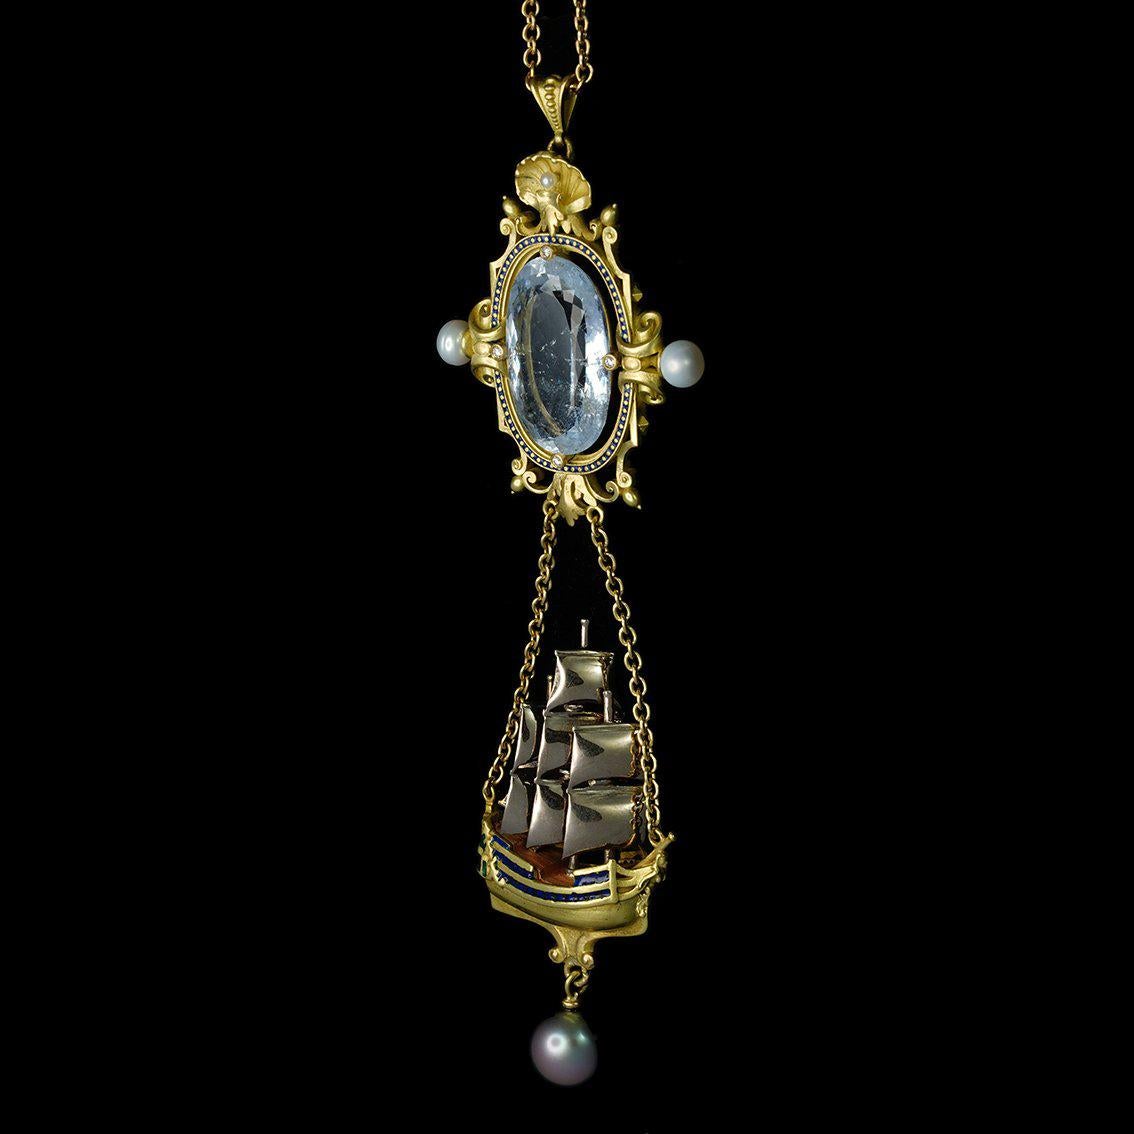 Aquamarine, Diamonds, Pearls, Enamel, 18kt Gold Antique Style Pendant Necklace For Sale 6